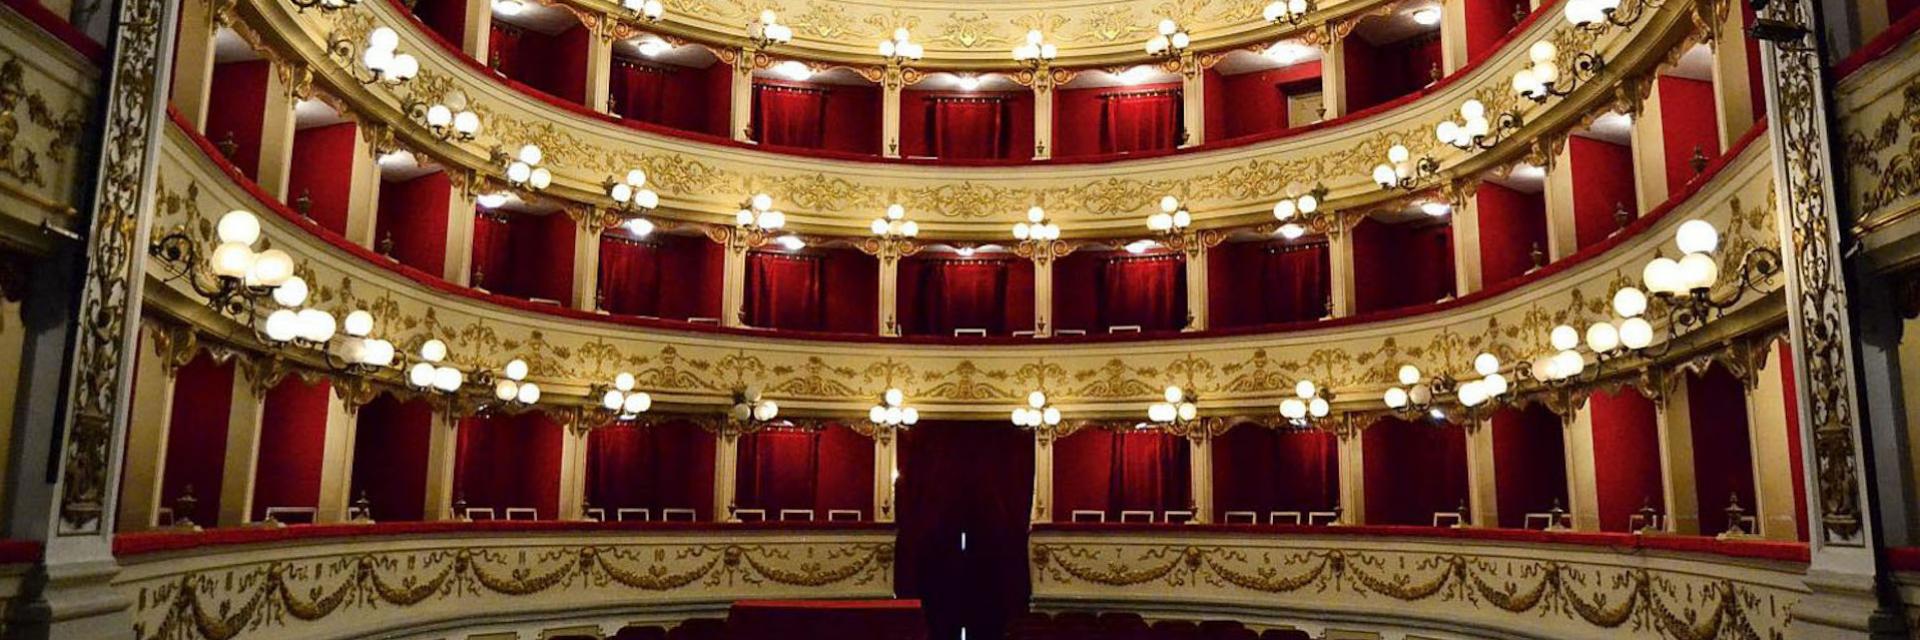 teatro marruccino